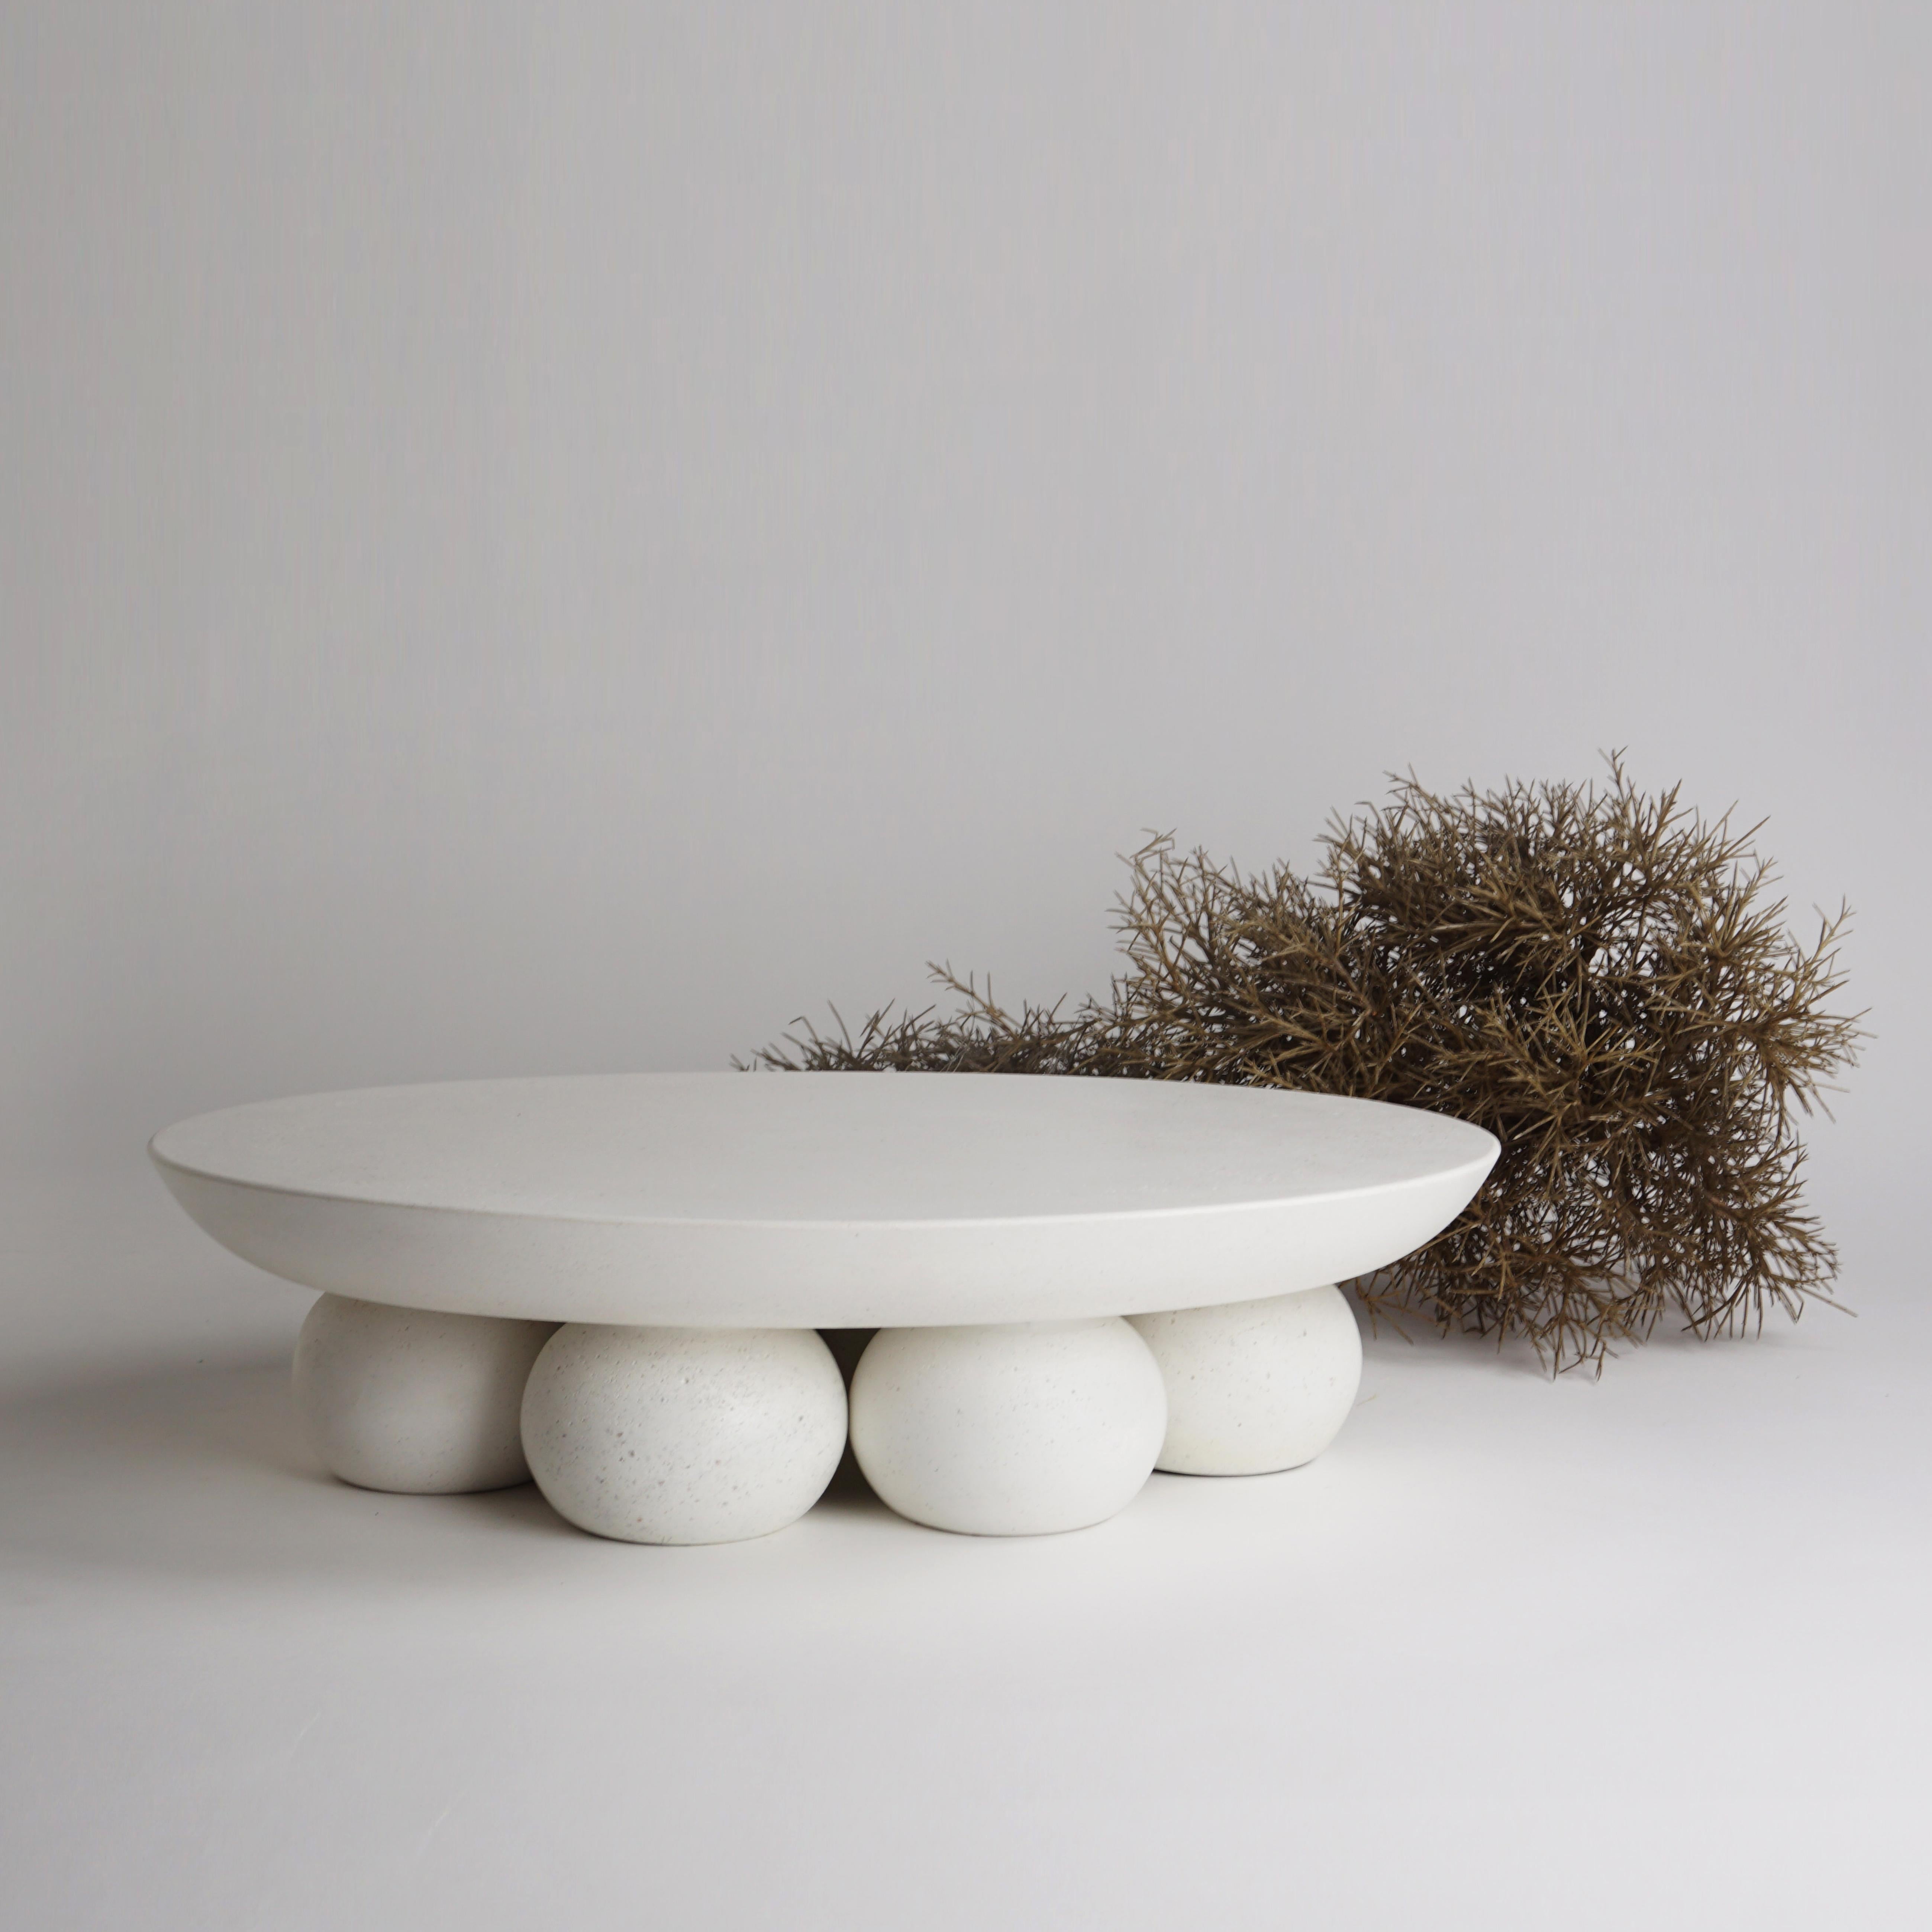 Organic Modern Sculptural Oval Tabletop Centerpiece 'PIEDI' by Alentes Atelier For Sale 1